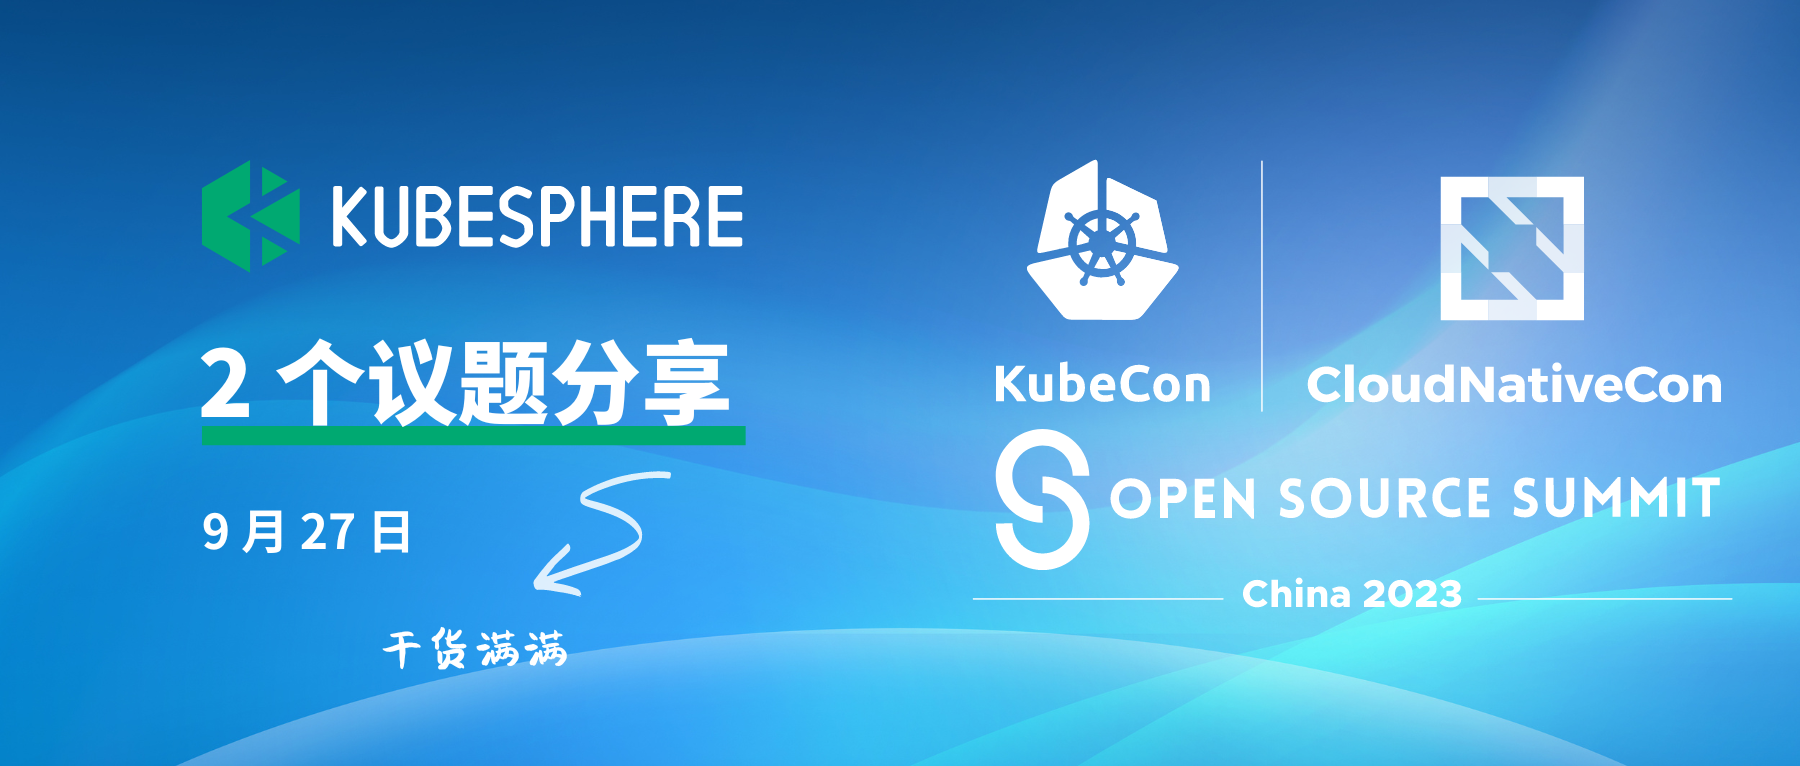 KubeSphere 团队将在 KubeCon China 中带来两个重磅分享